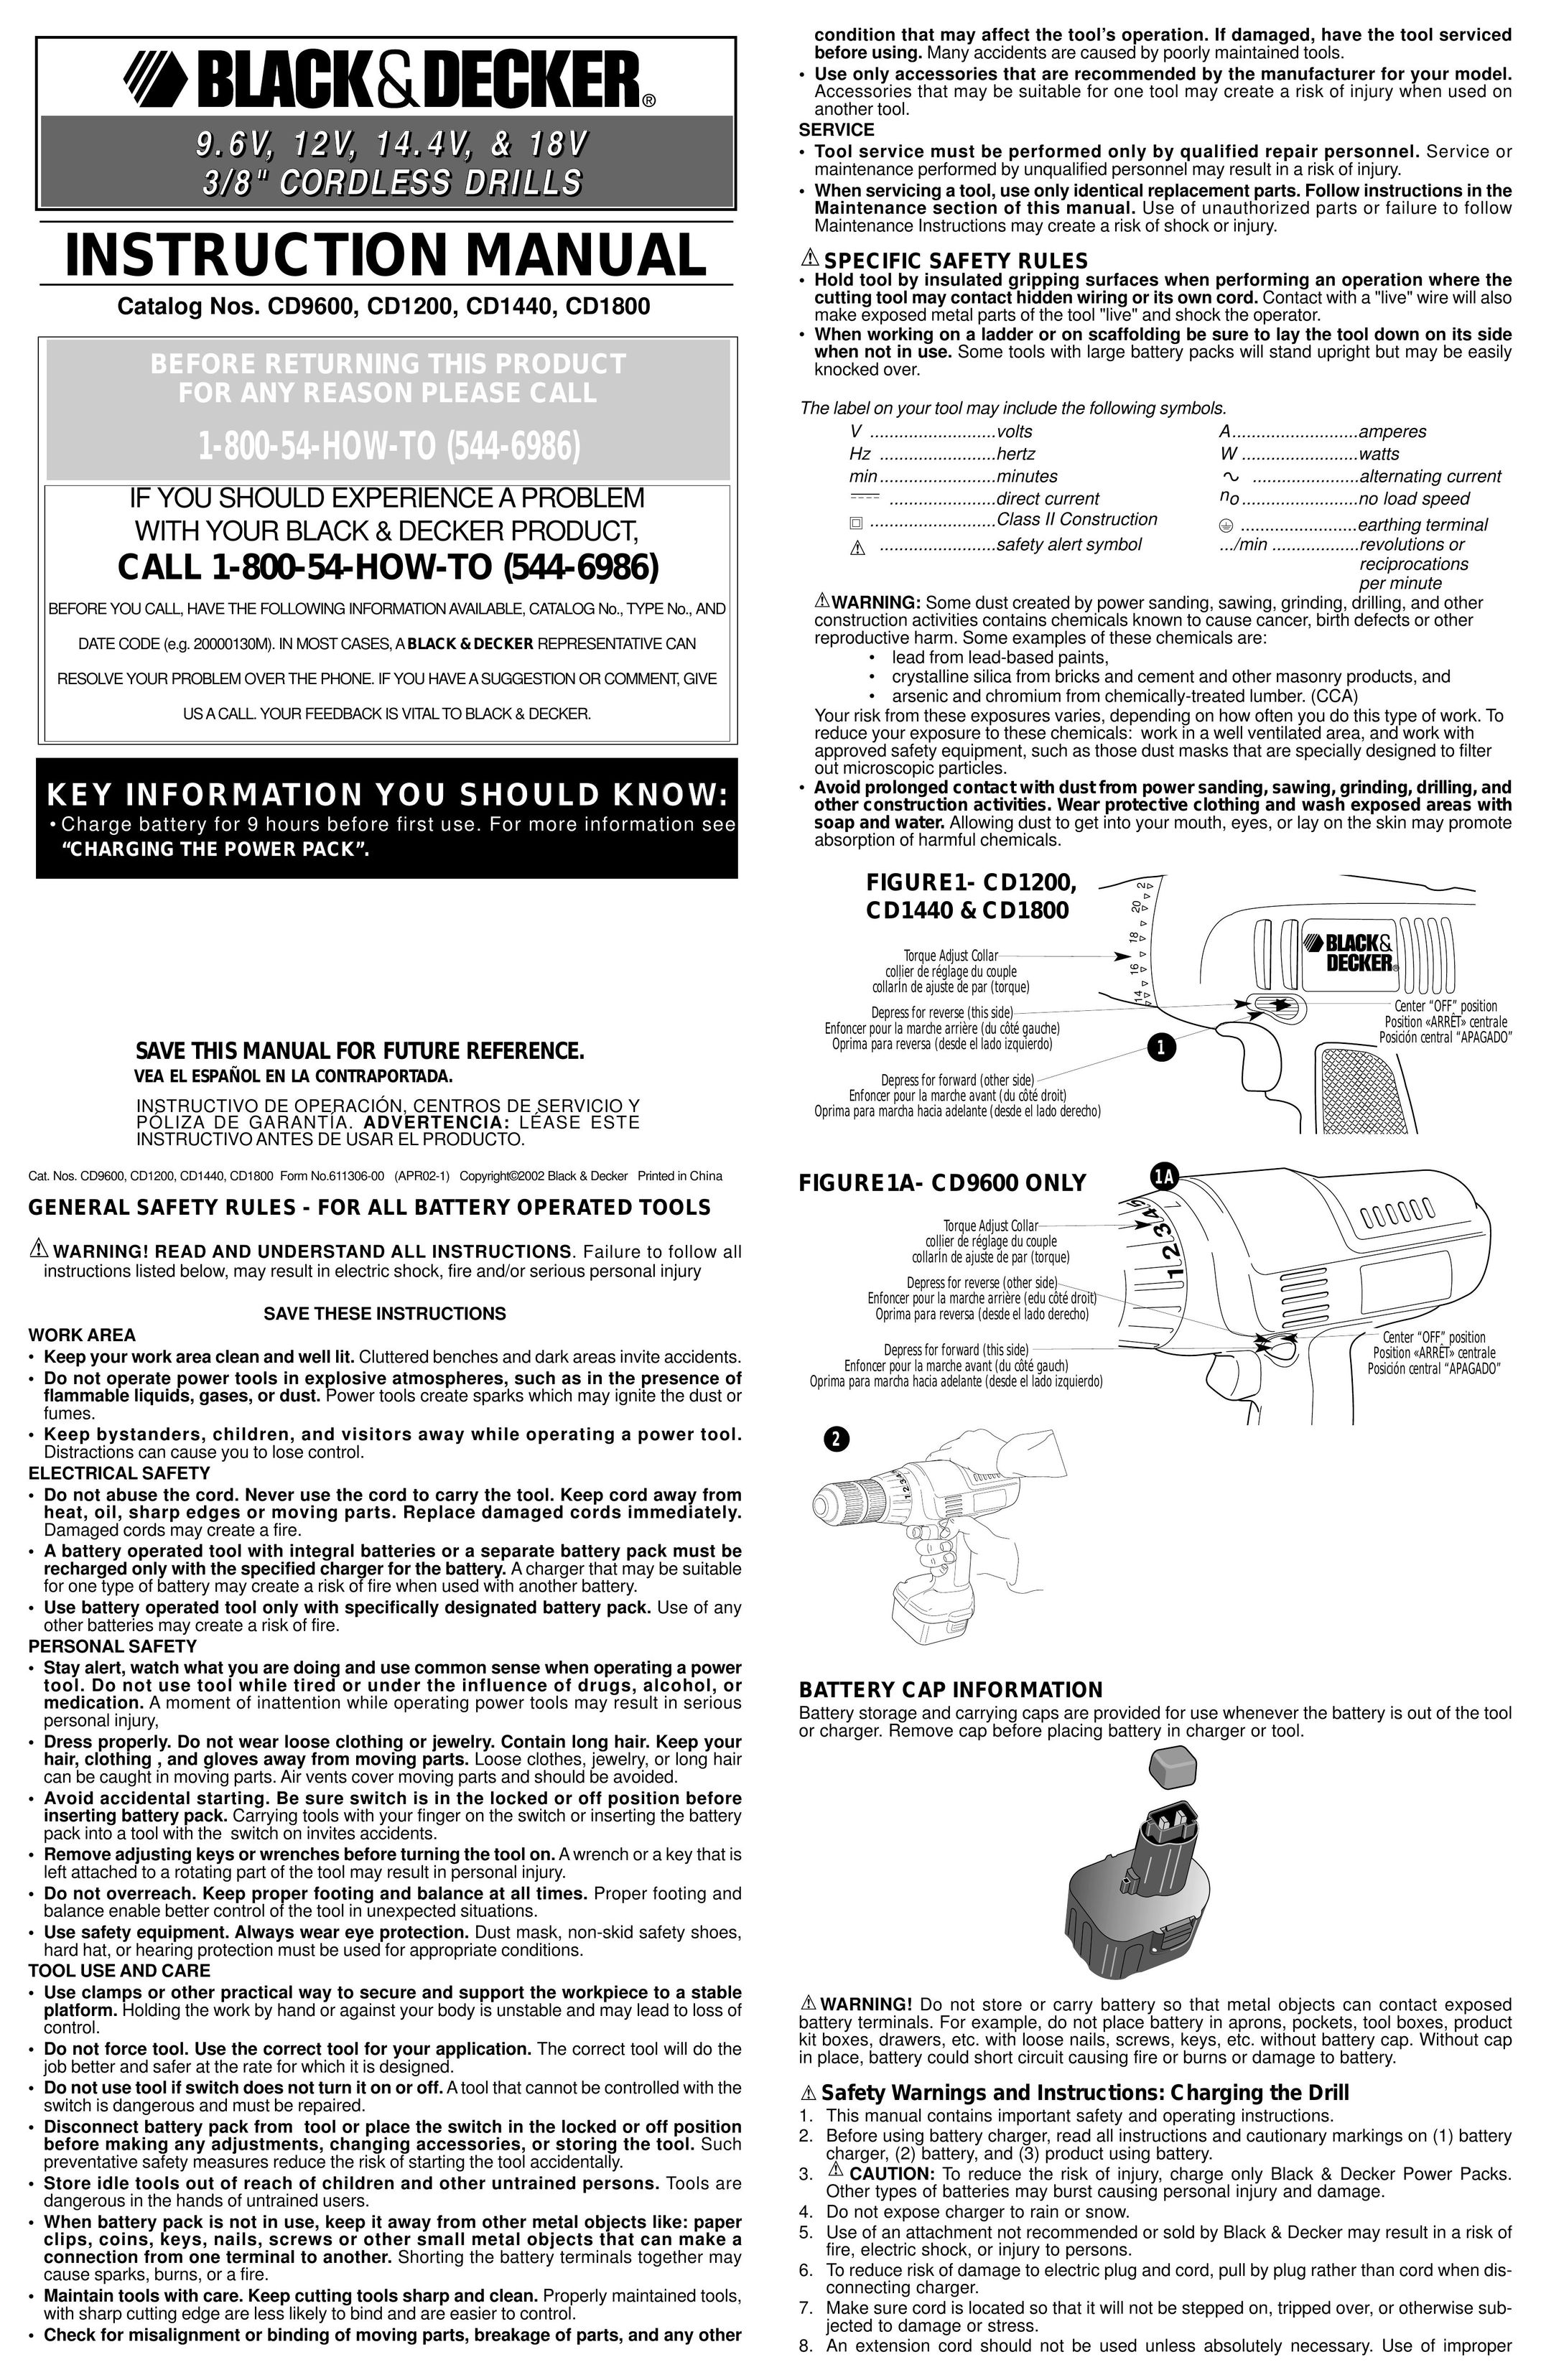 Black & Decker 611306-00 Cordless Drill User Manual